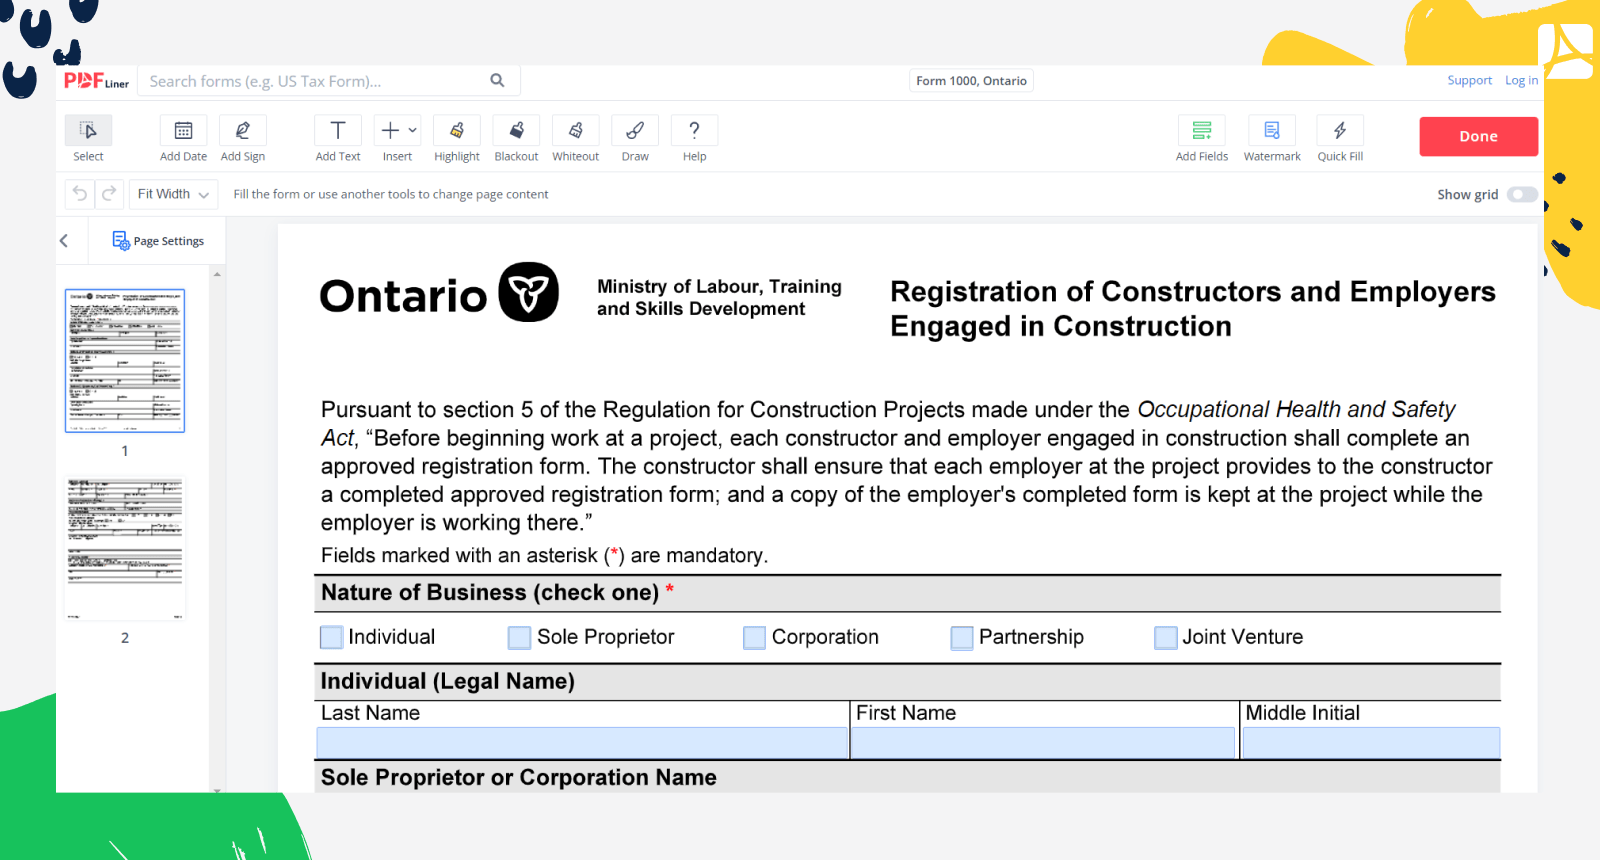 Form 1000, Ontario on PDFLiner